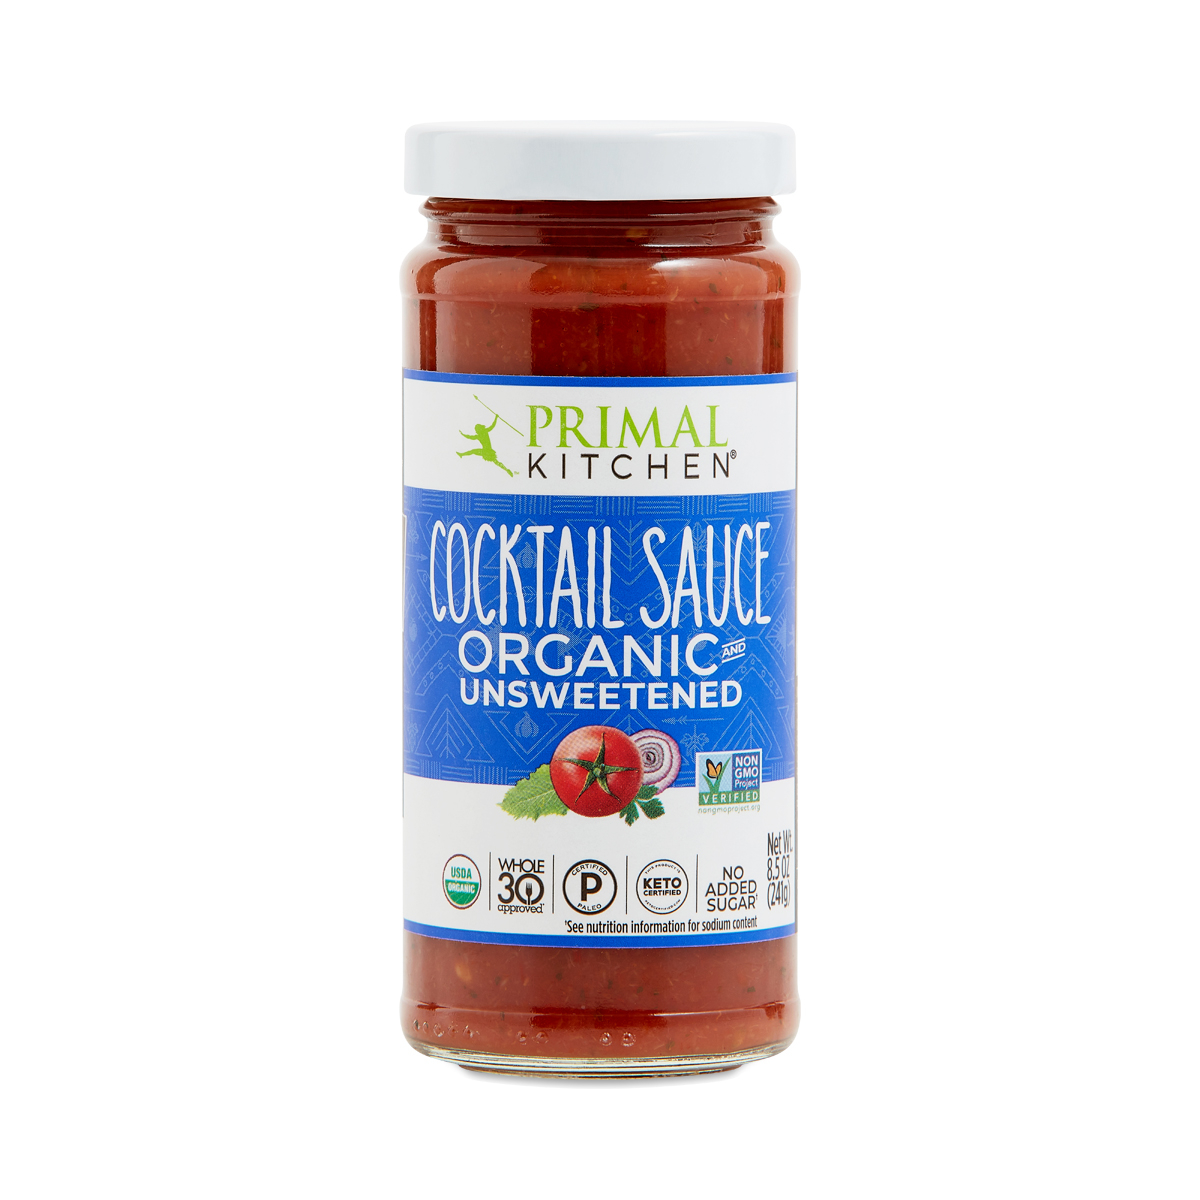 Primal Kitchen Cocktail Sauce 8.5 oz bottle